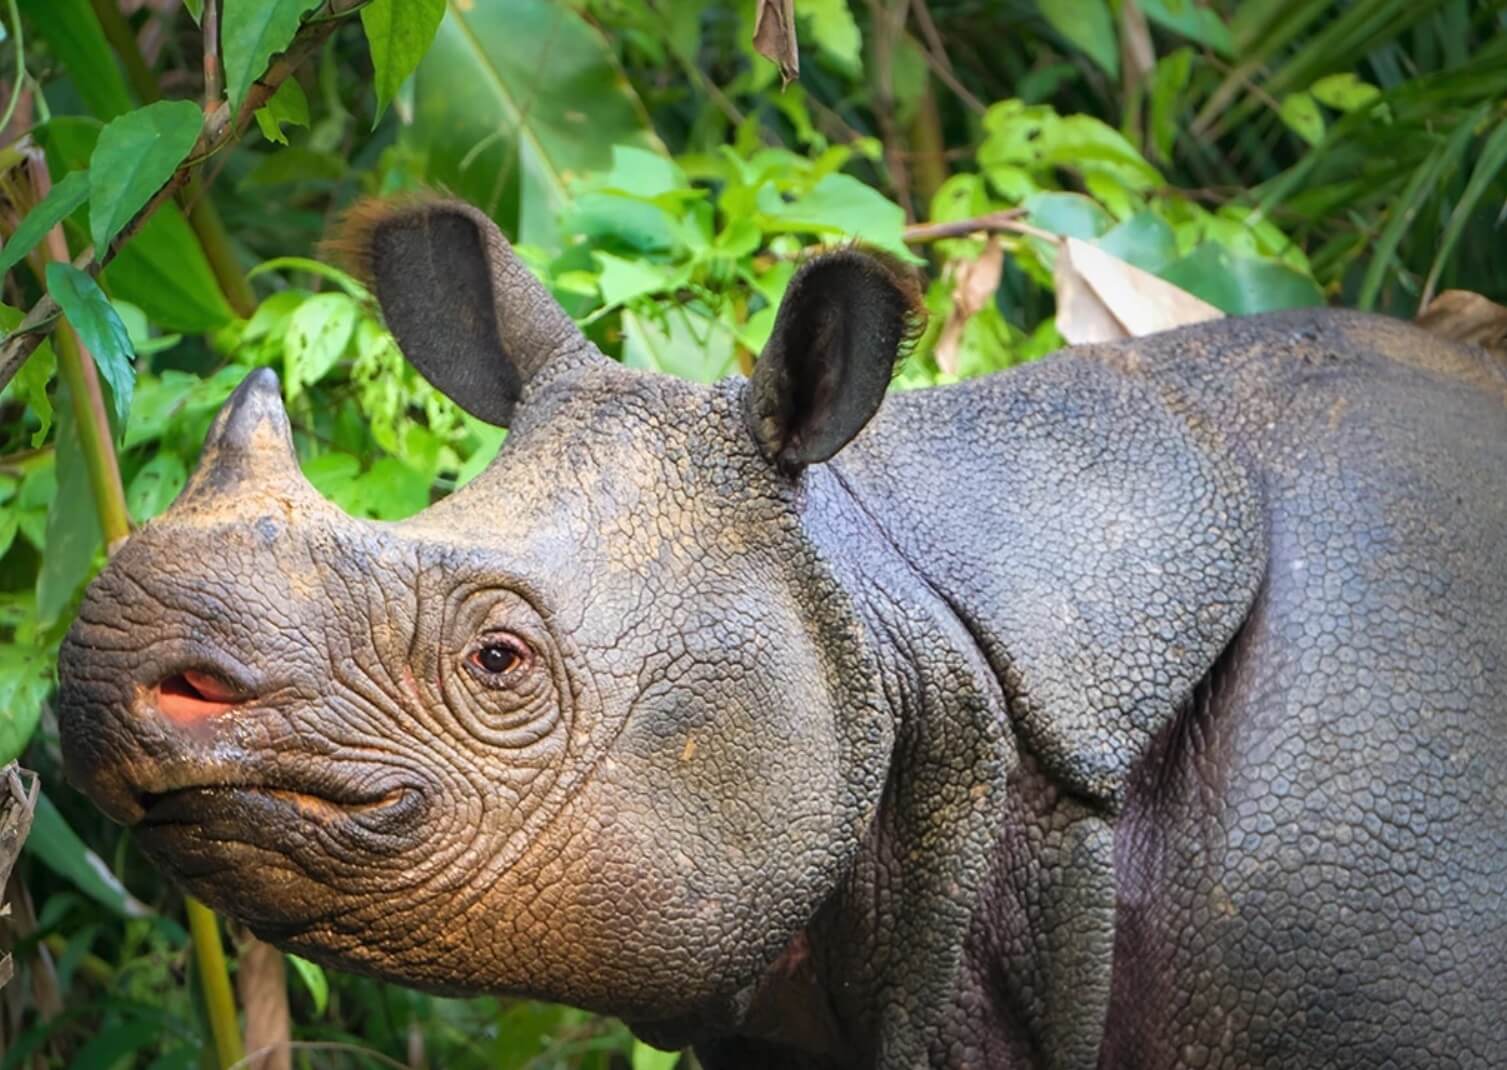 Rhinocéros de Java au milieu de la végétation.